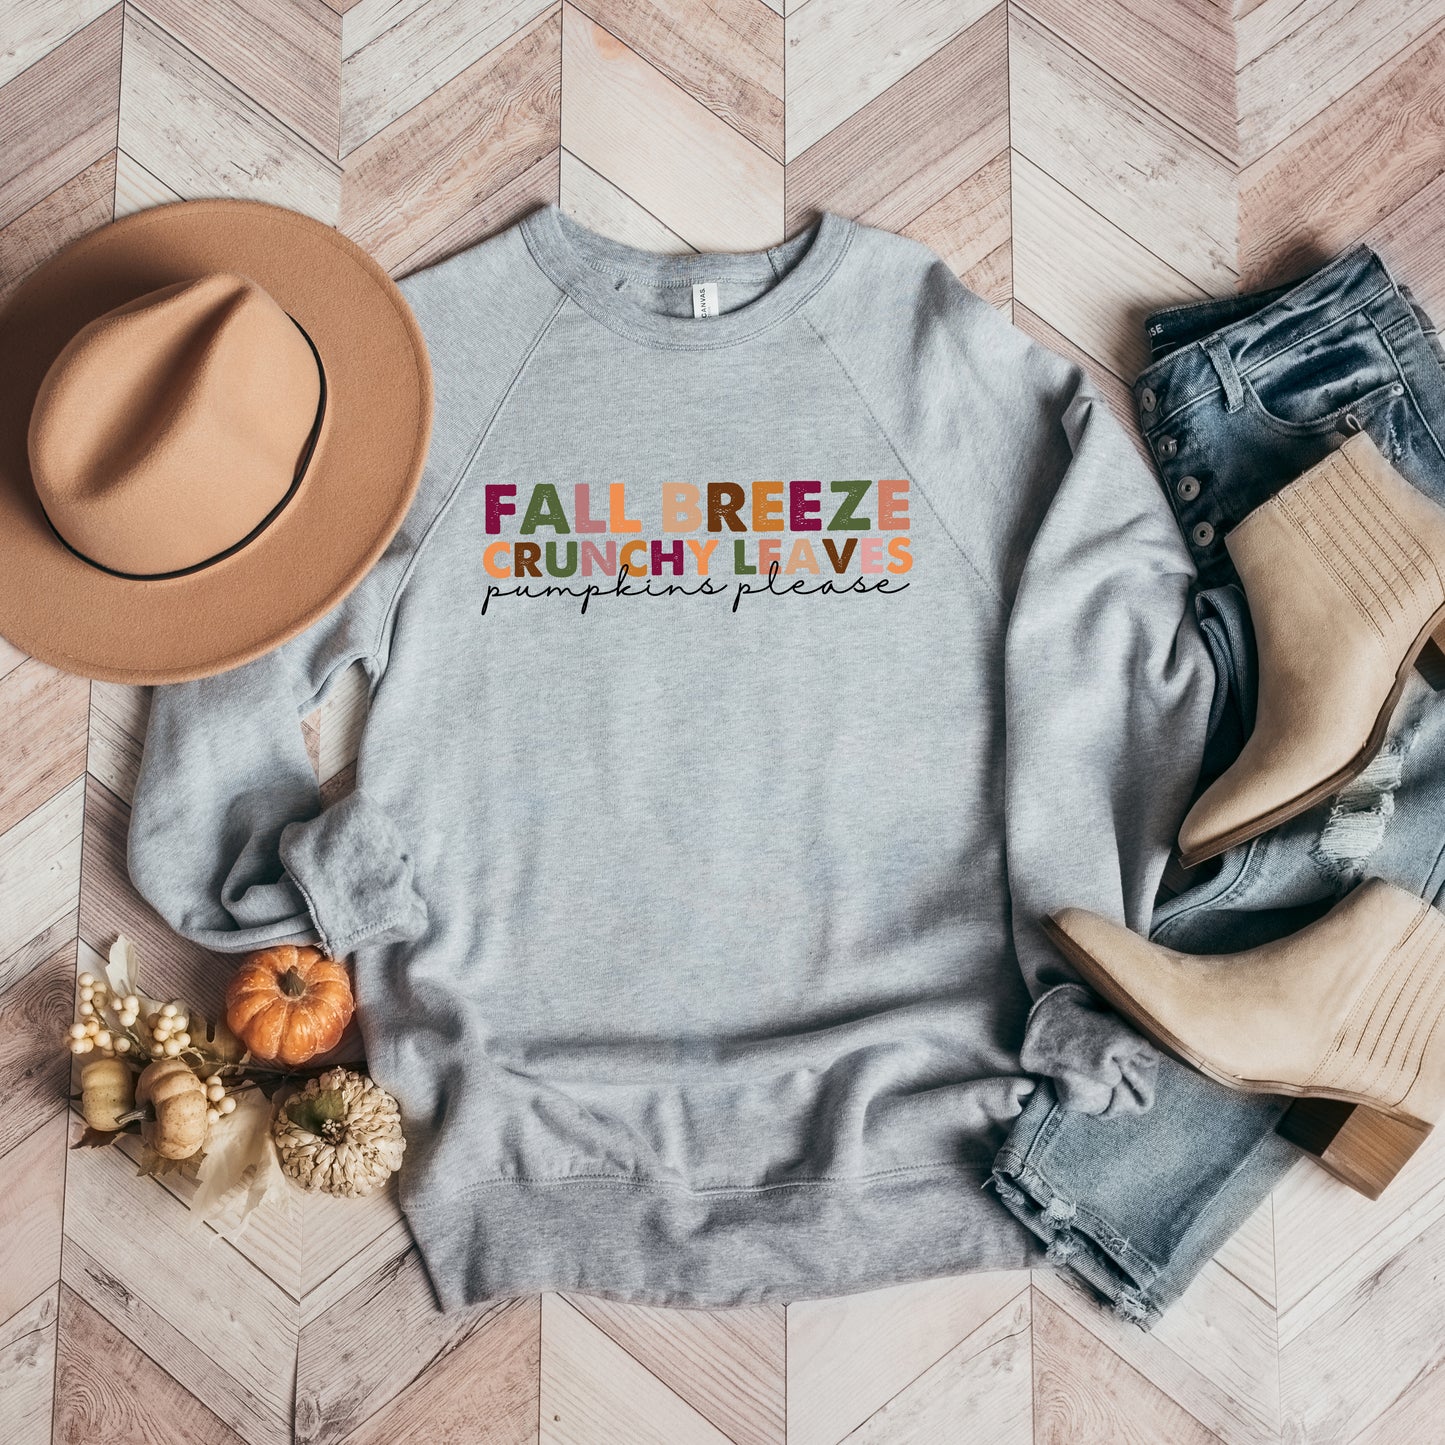 Fall Breeze Crunch Leaves Colorful | Bella Canvas Sweatshirt